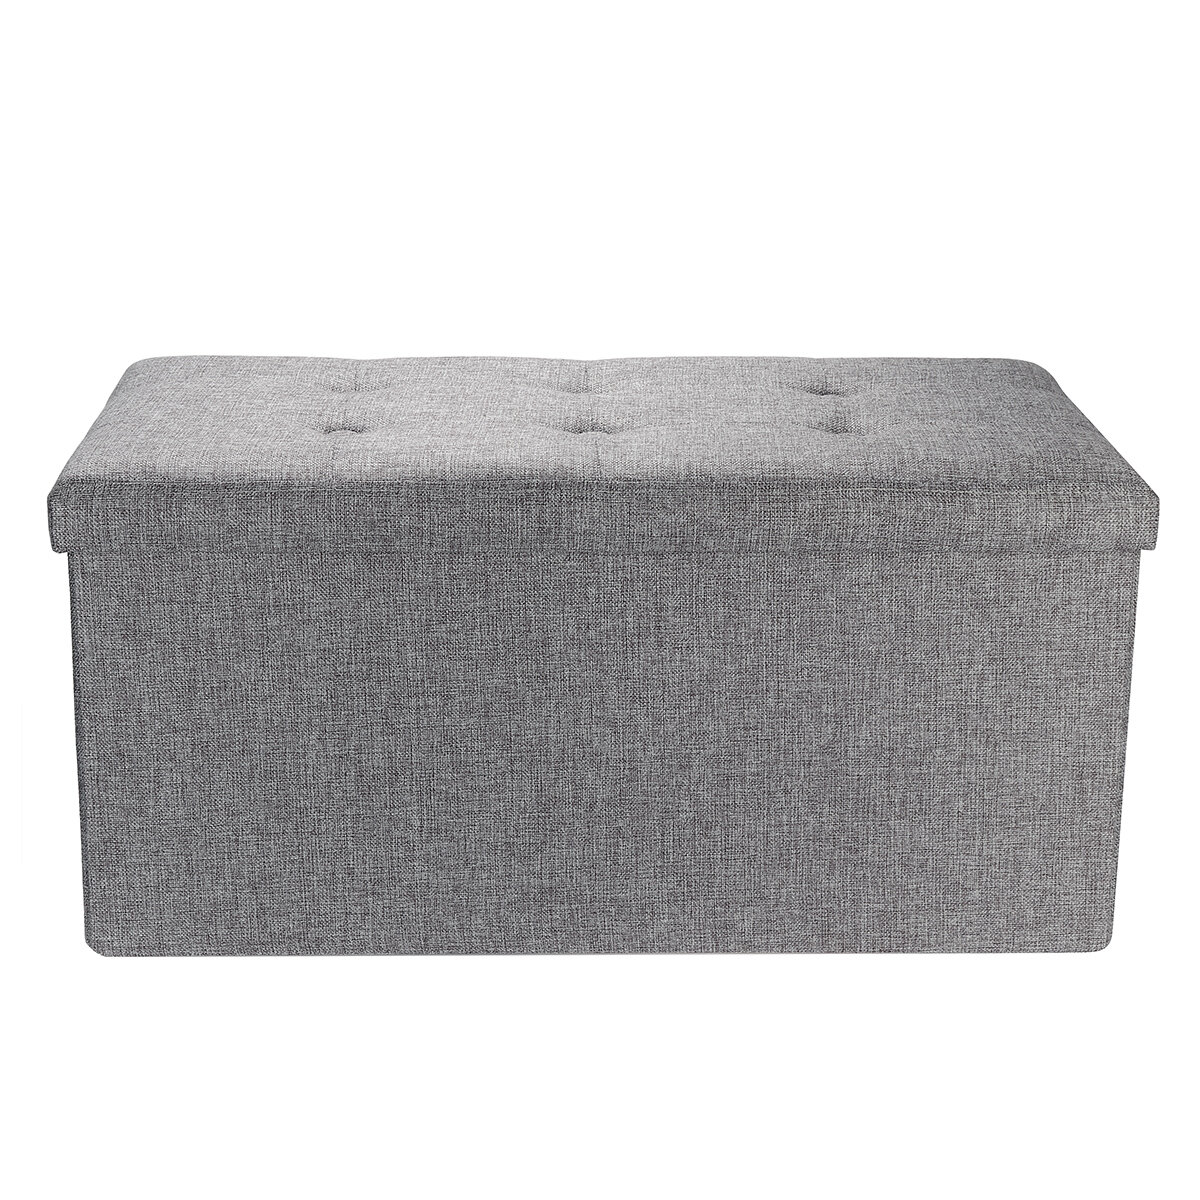 Image of Linen Storage Ottoman Foldaway Seat Stool Bench Chest Toy Box Pouffe Bench